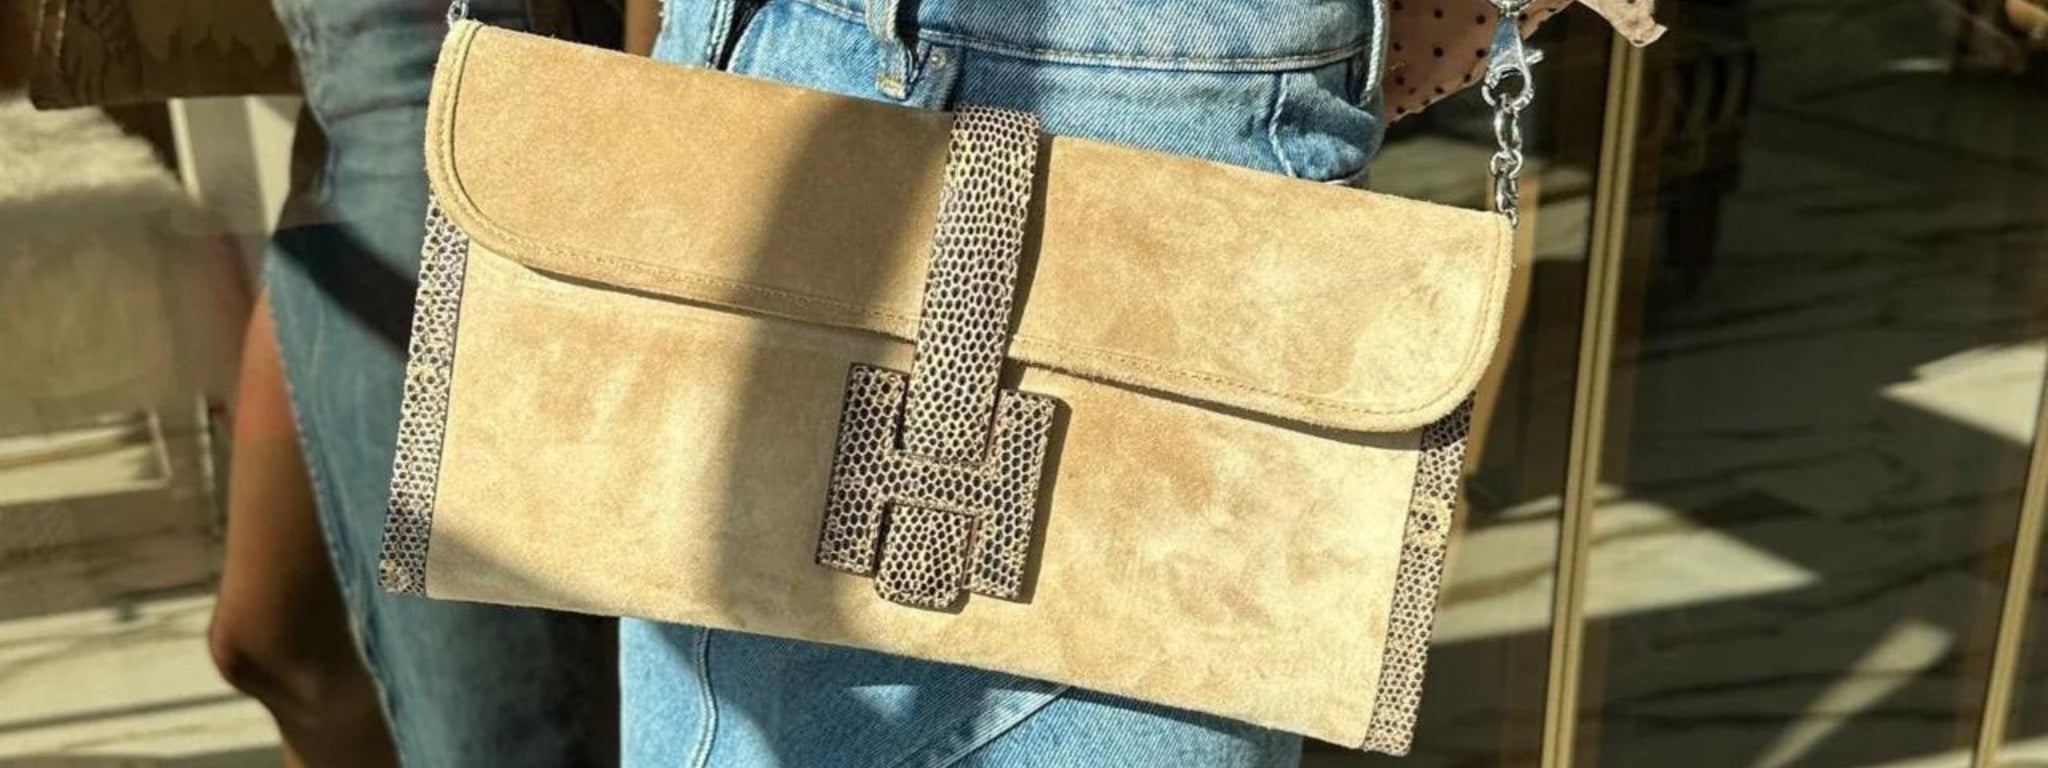 Hermes Cinhetic Mini Wallet Ombre Lizard Clutch Shoulder Bag